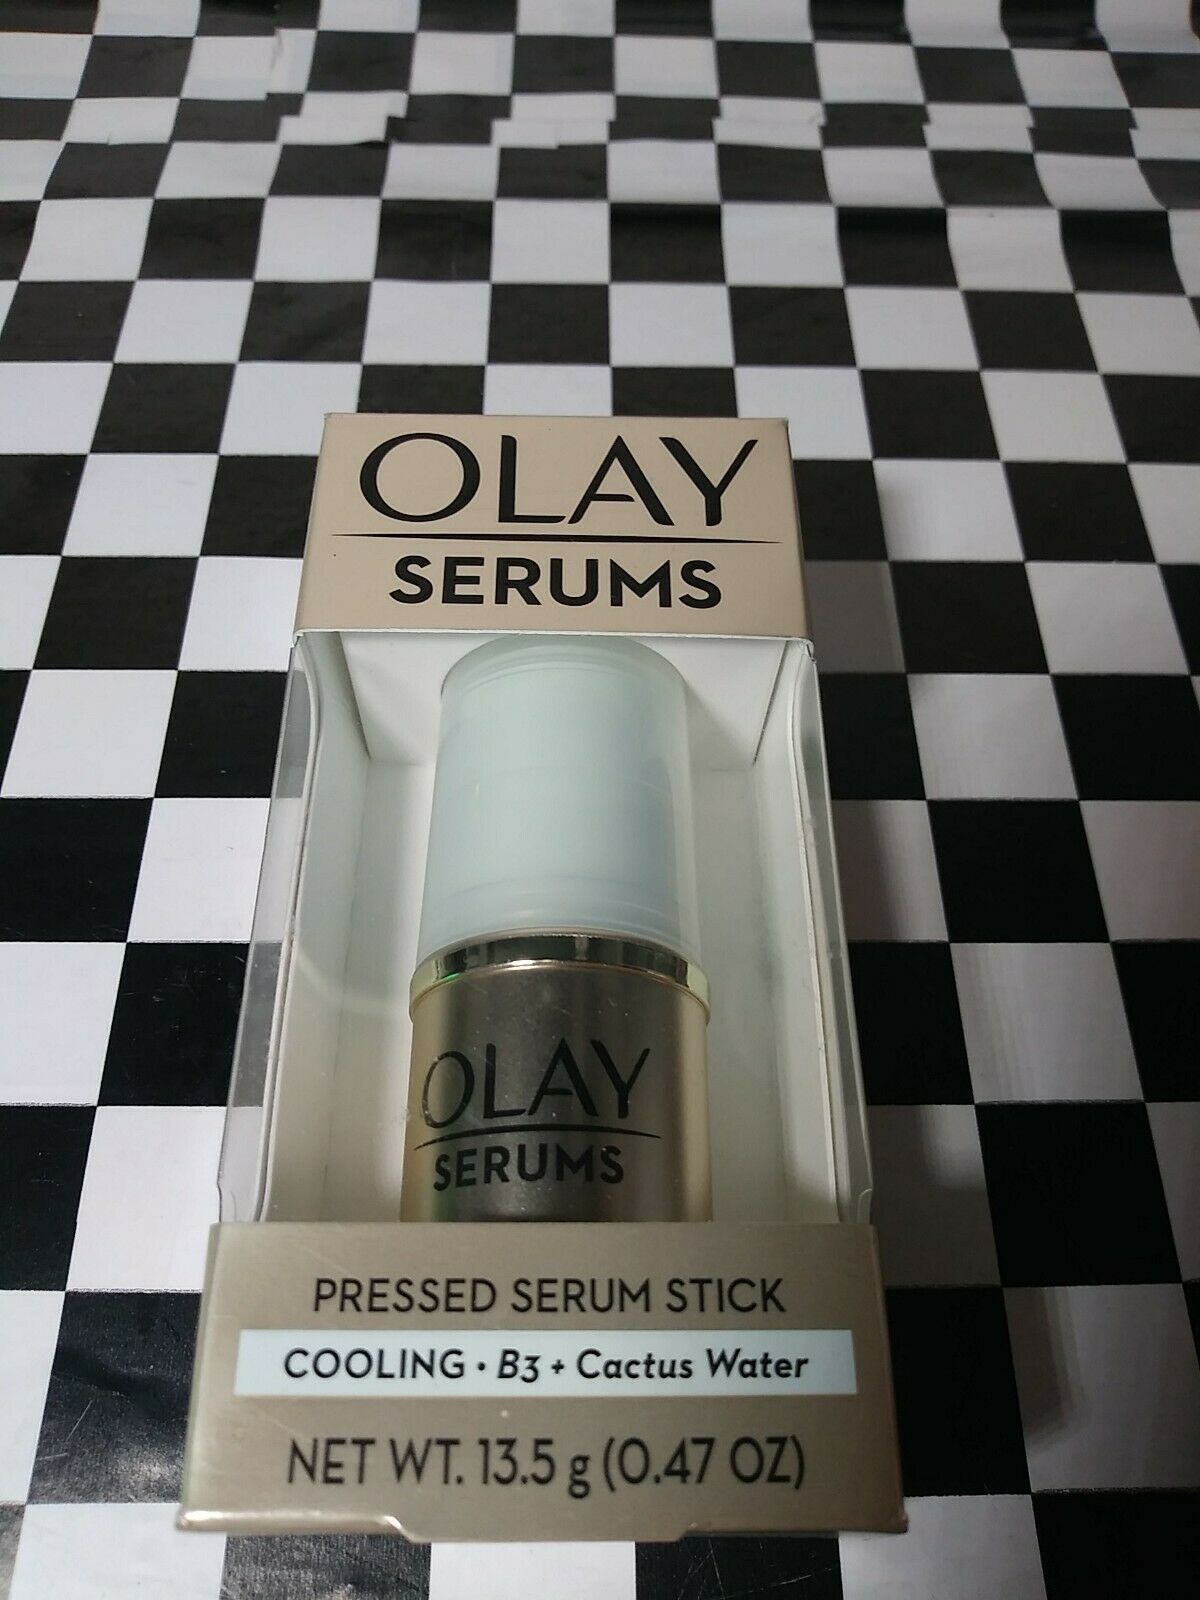 Olay Serums Pressed Serum Stick Cooling Hydration - 0.47oz - $8.59